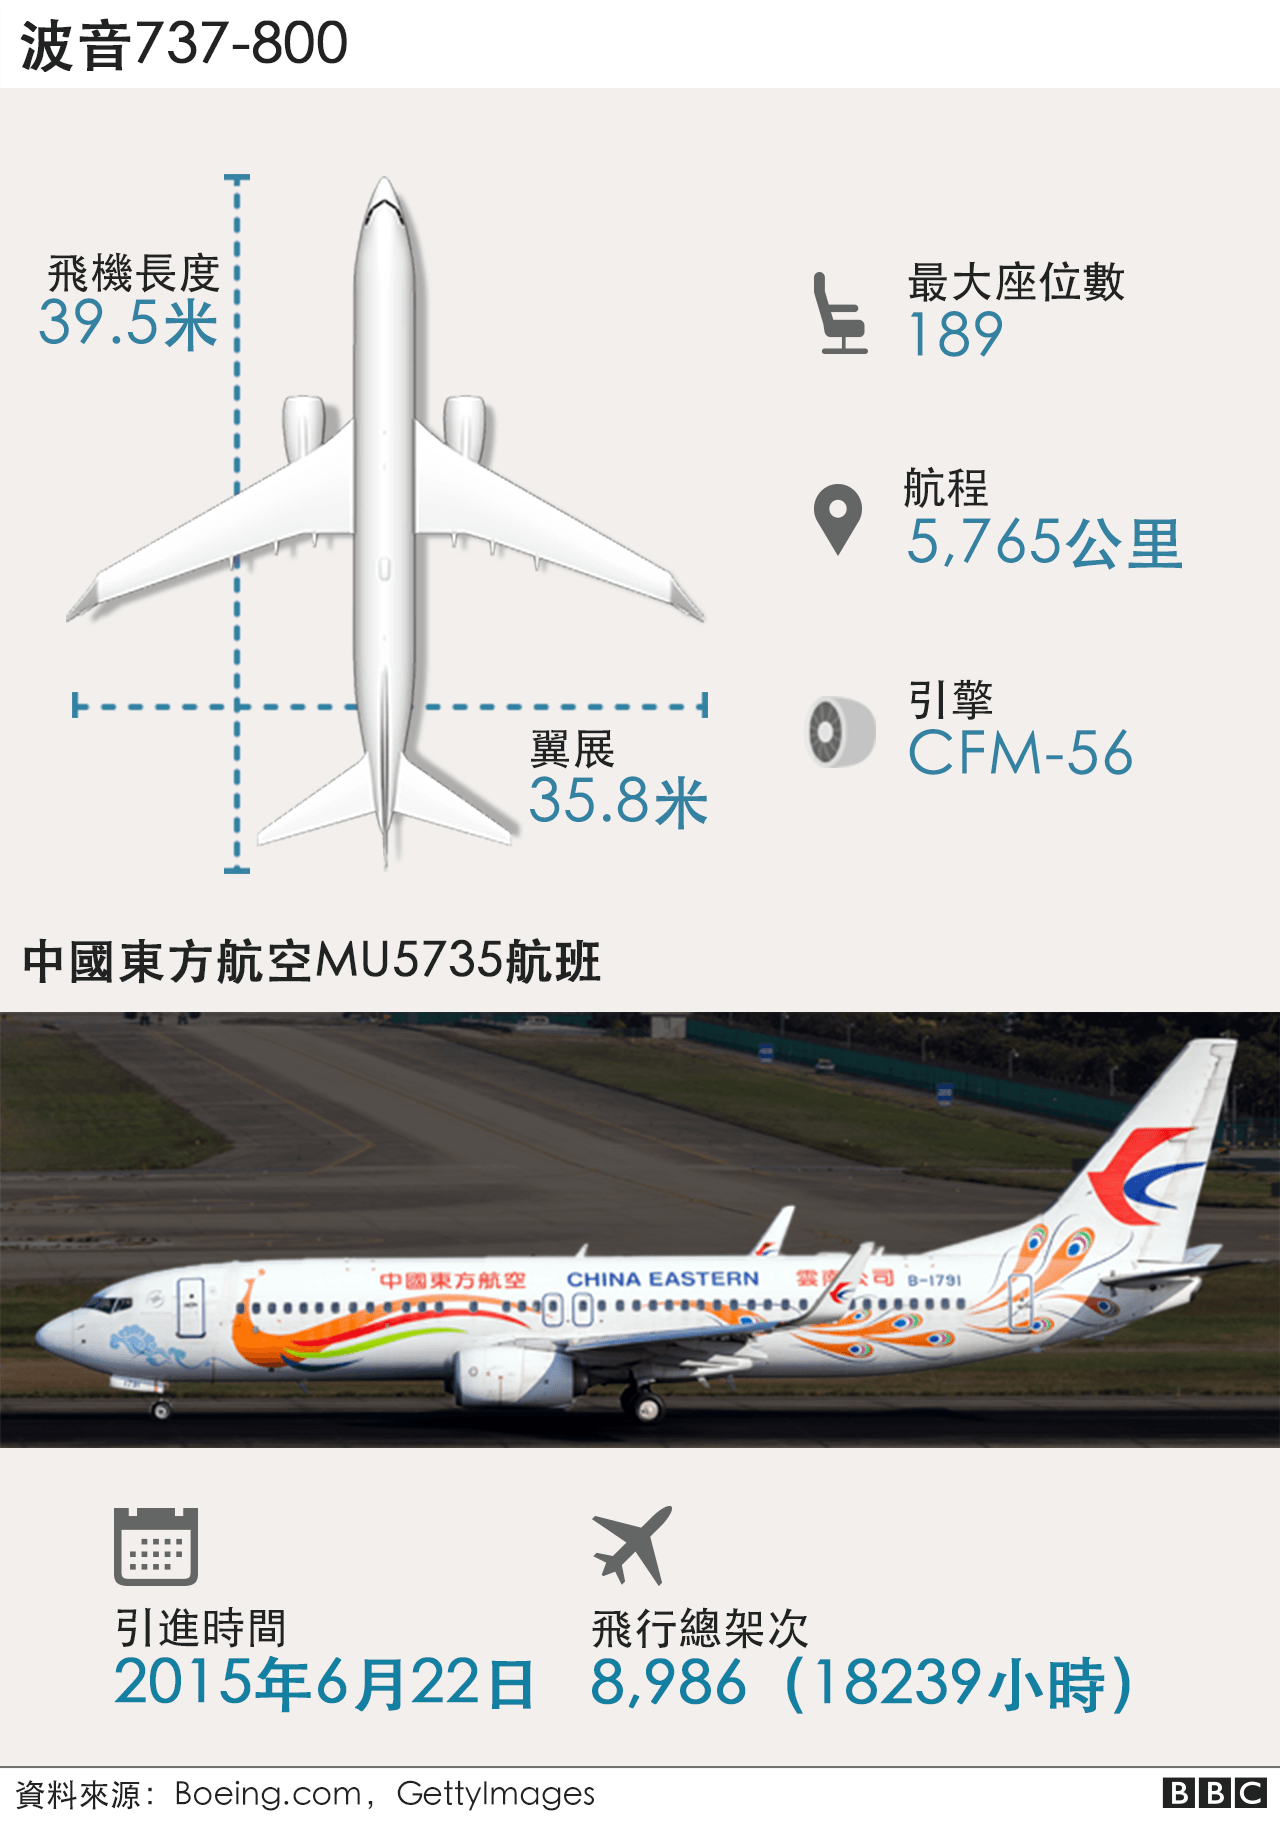 123832995_china_eastern_bboeing_737_infographic_640_chinese-nc-2x-nc_Q53bAqZemez9